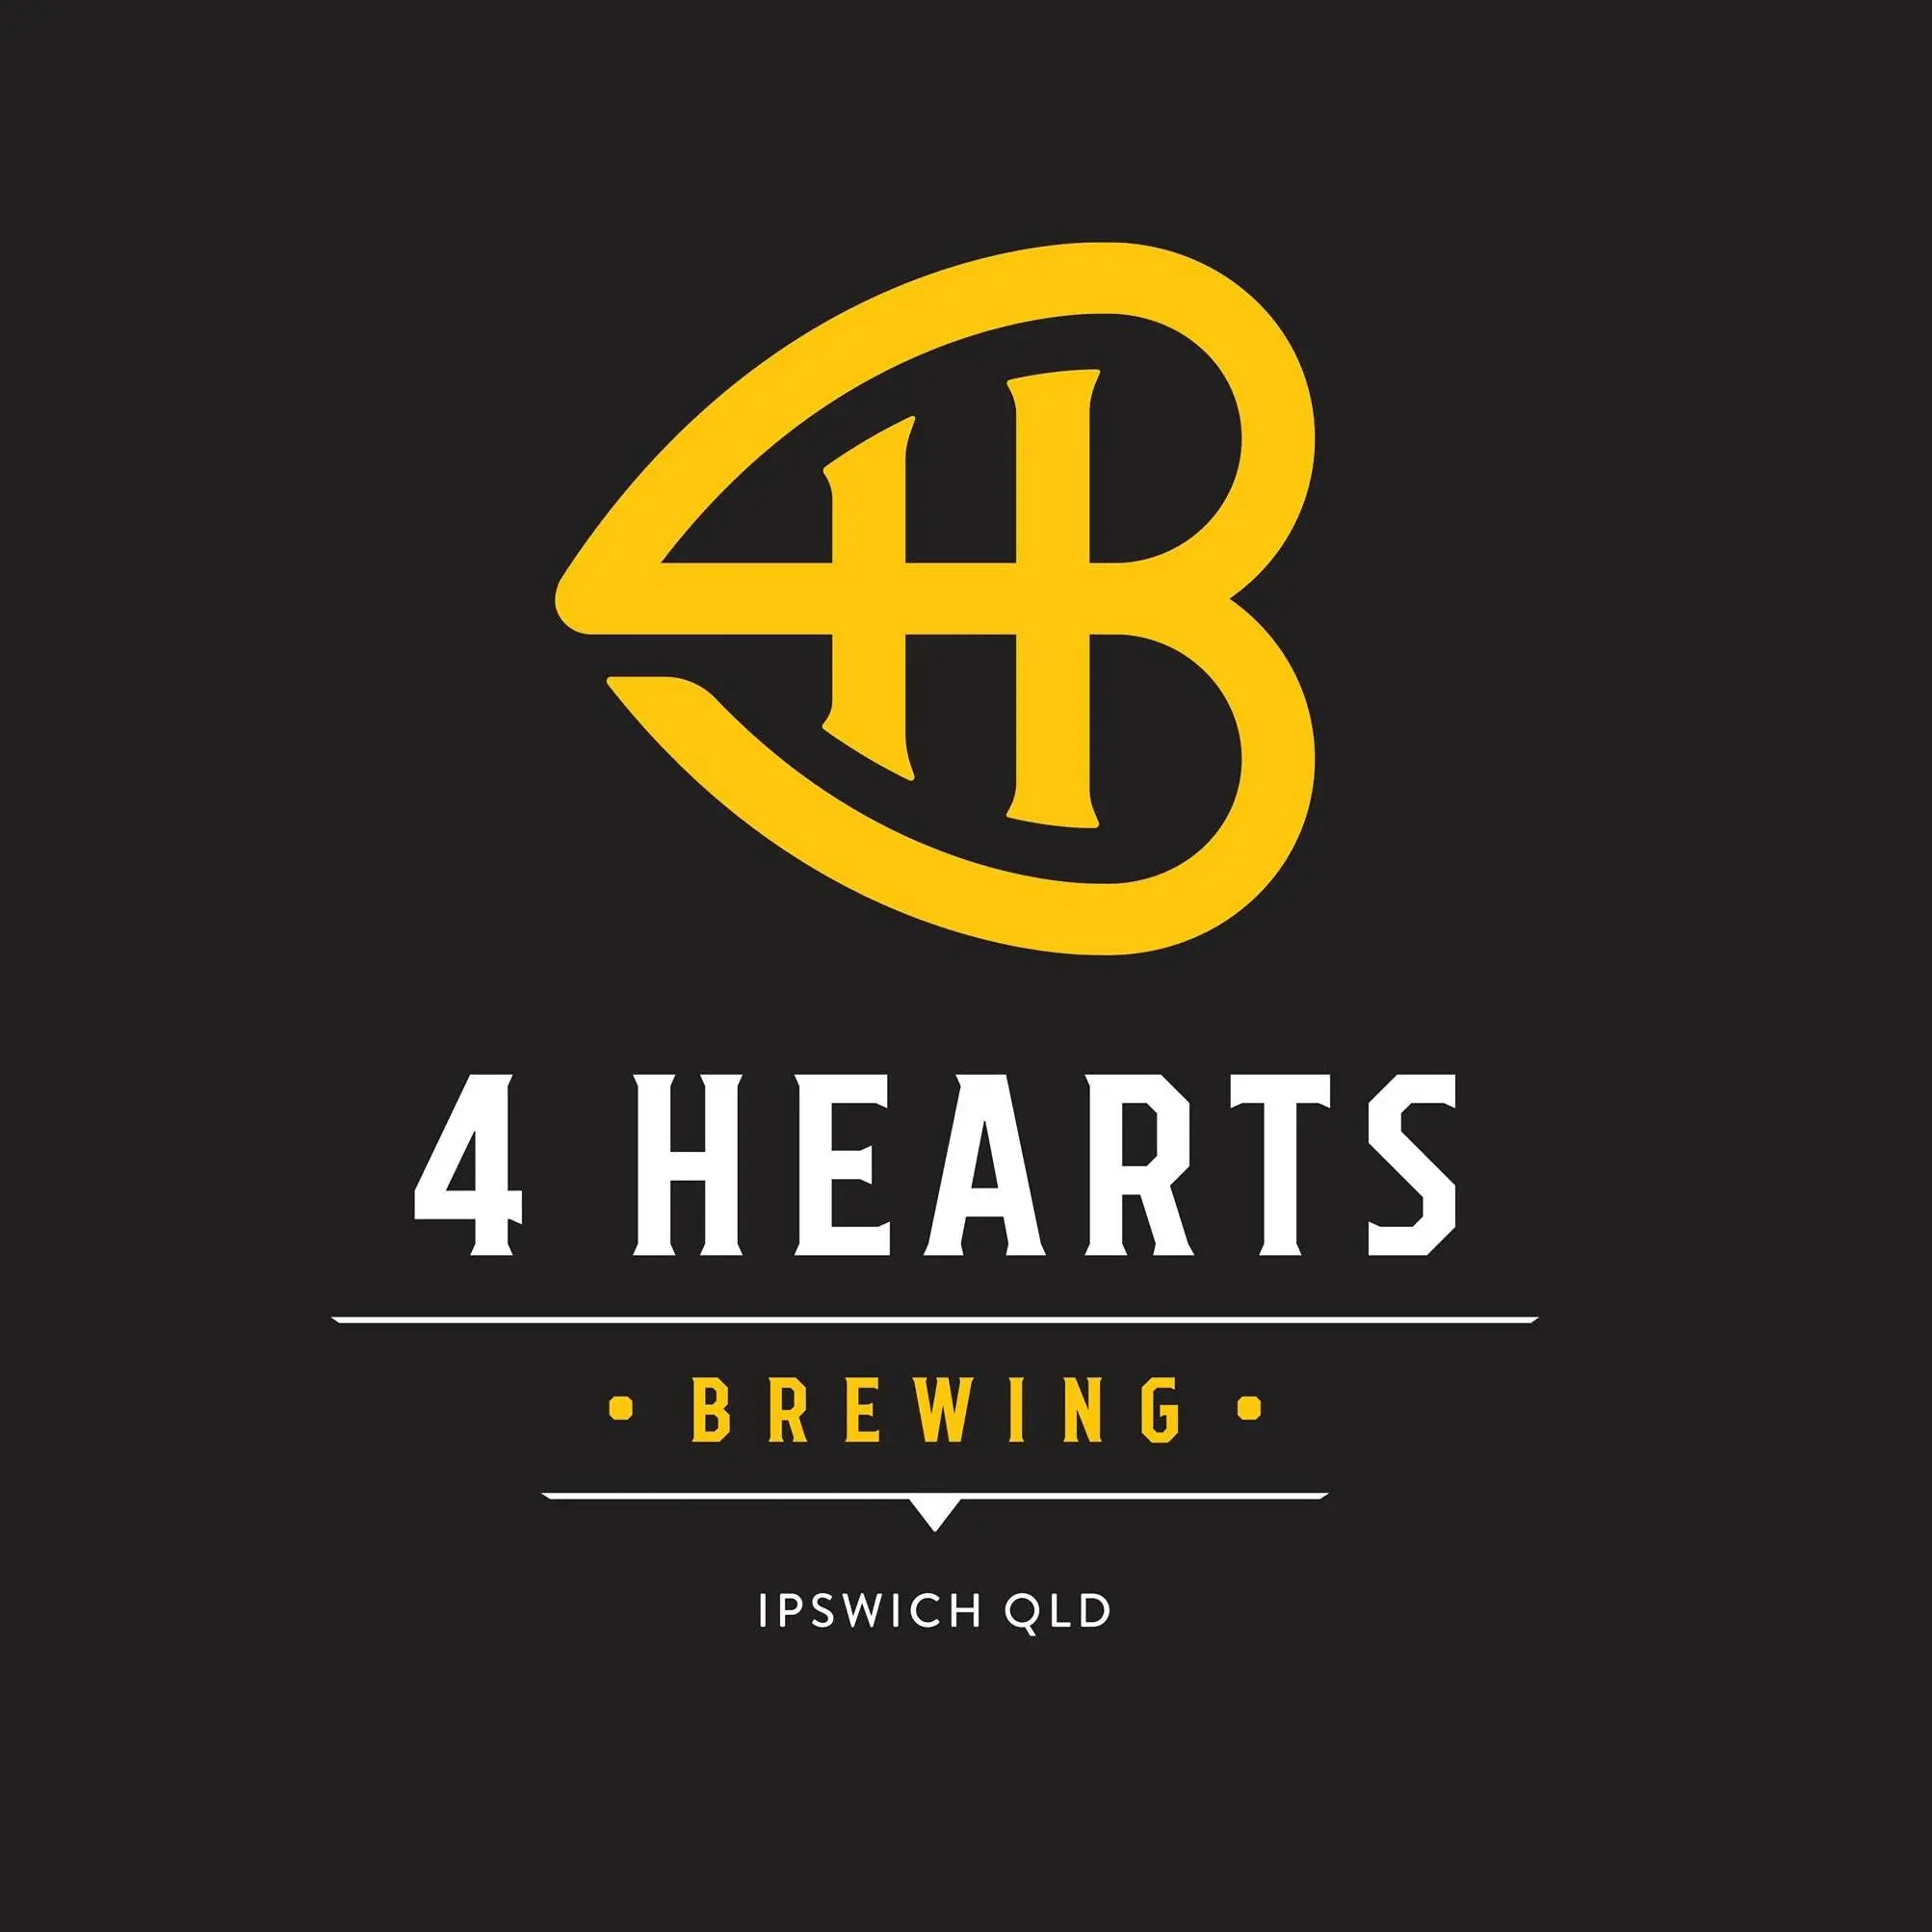 4 Hearts Brewing Co logo square